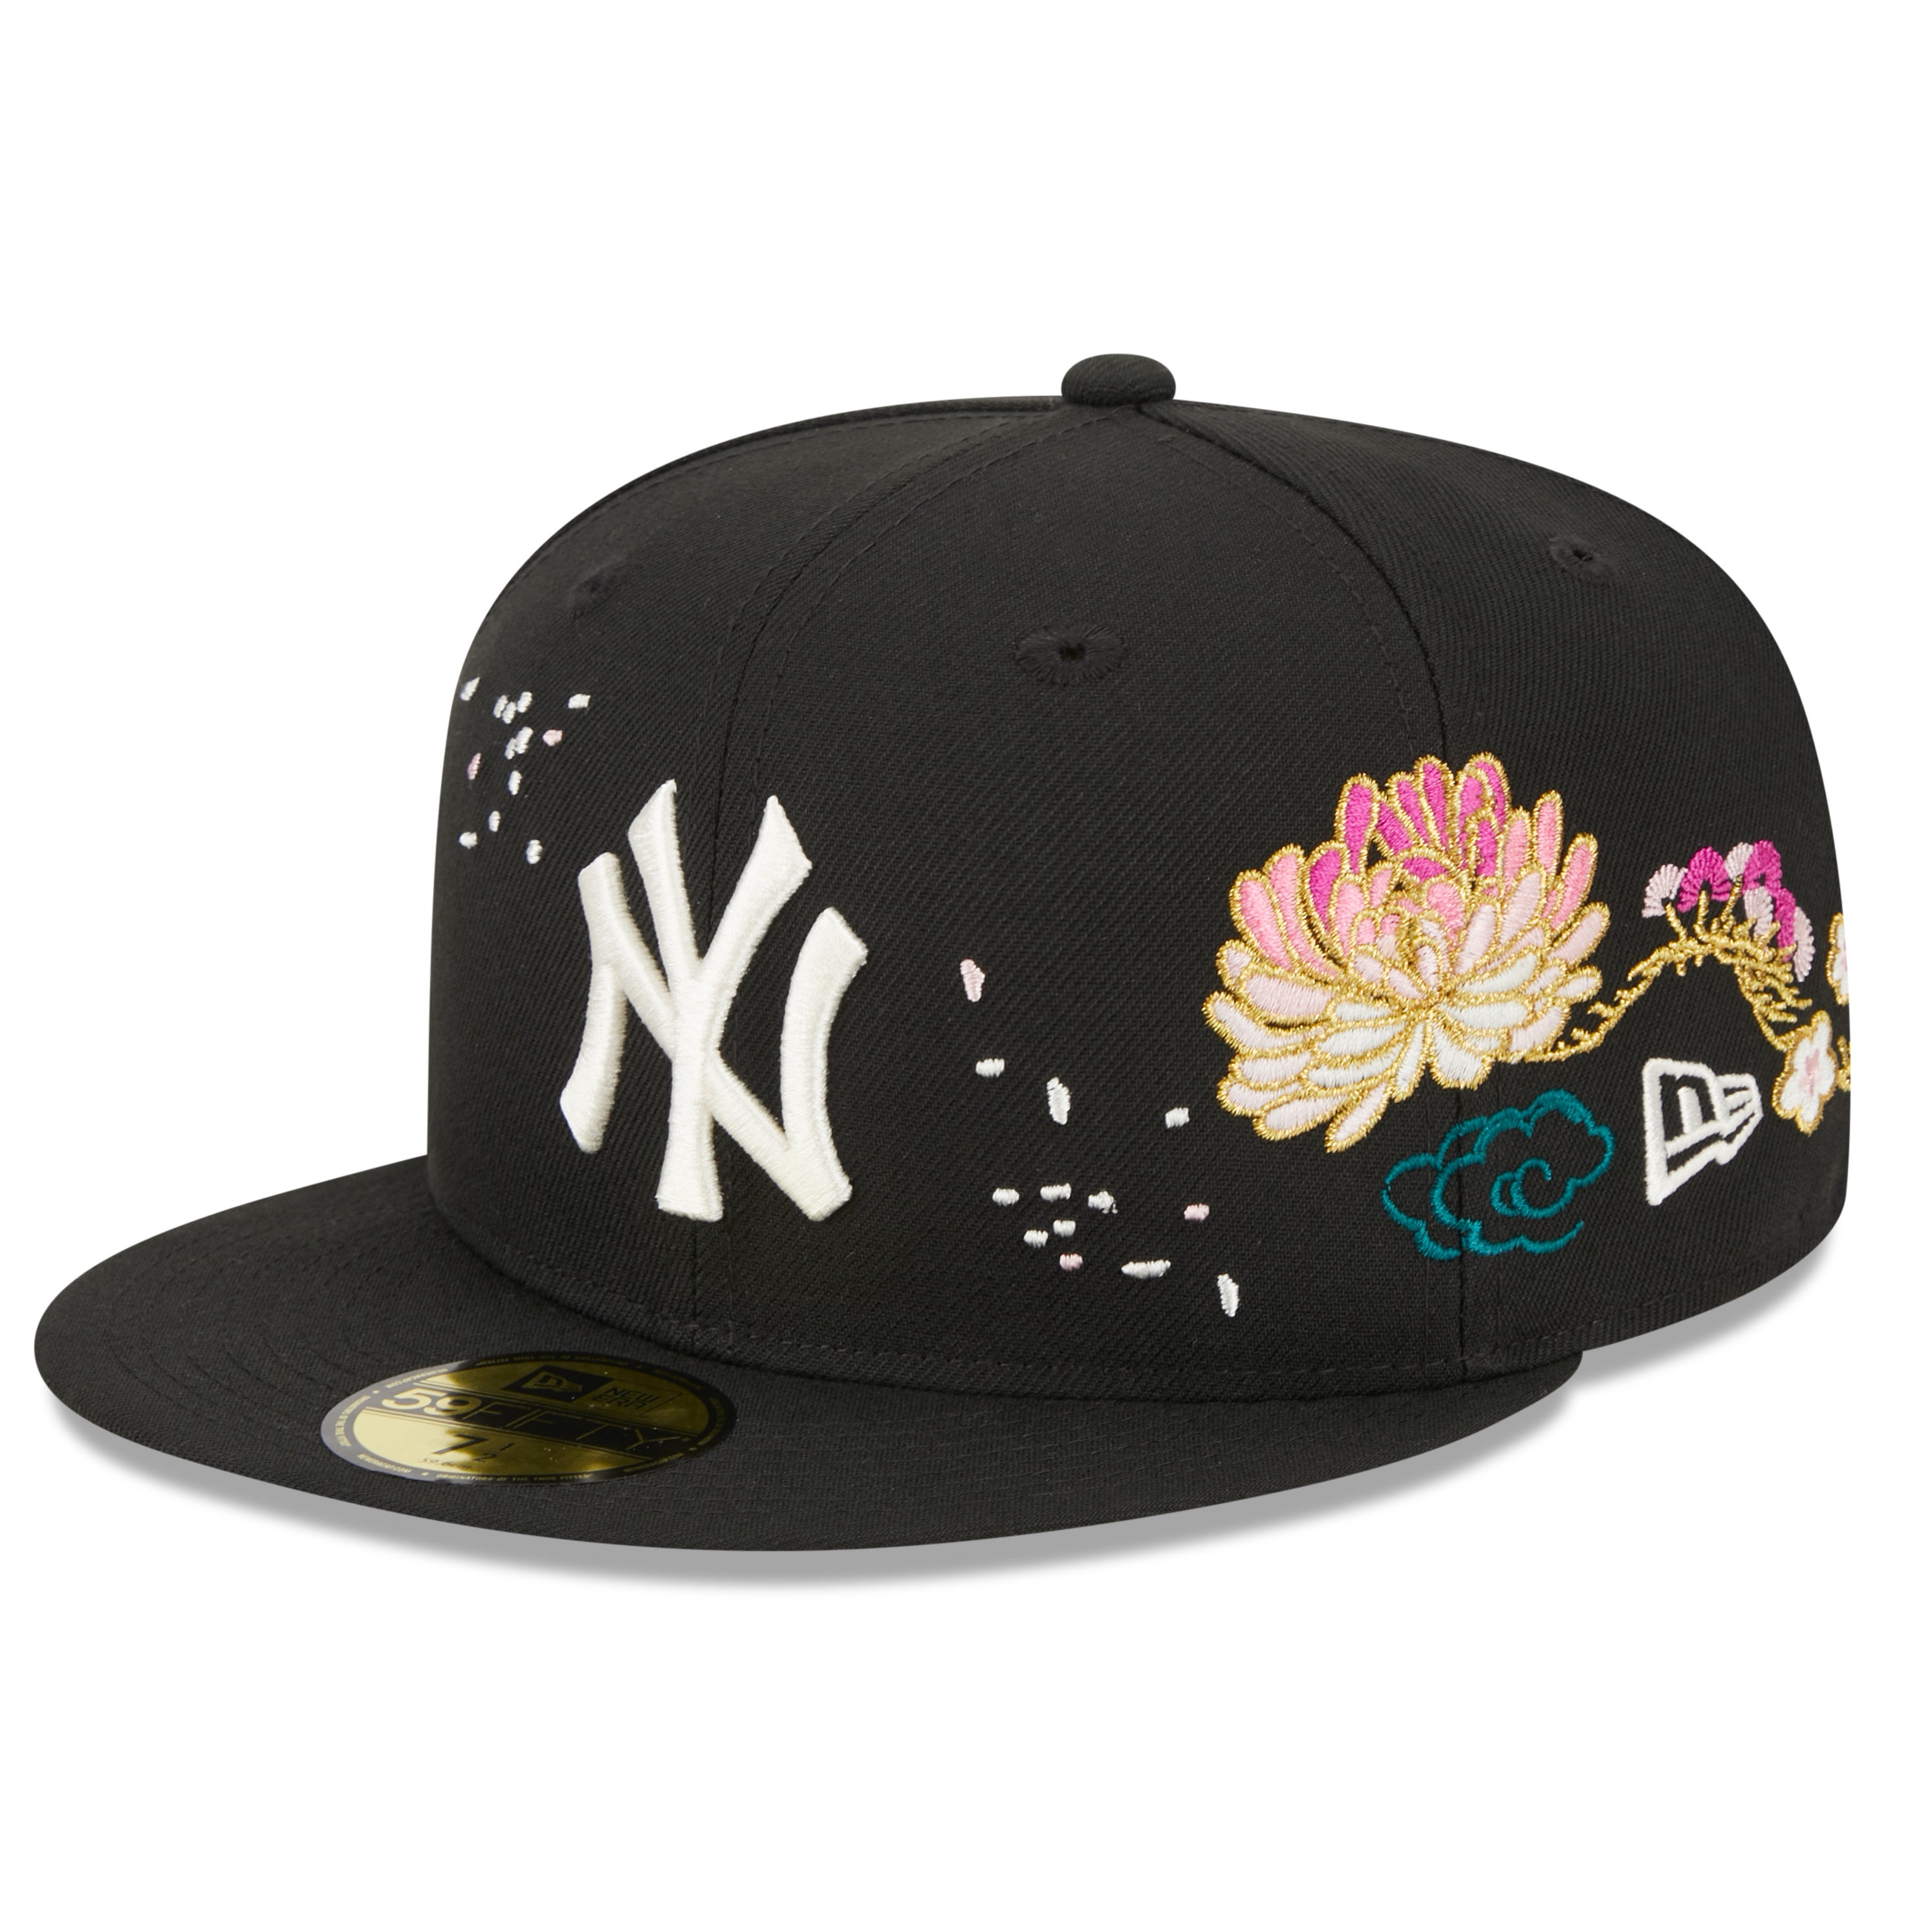 NEW ERA 59FIFTY MLB NEW YORK YANKEES CHERRY BLOSSOM BLACK / GREY UV FITTED CAP